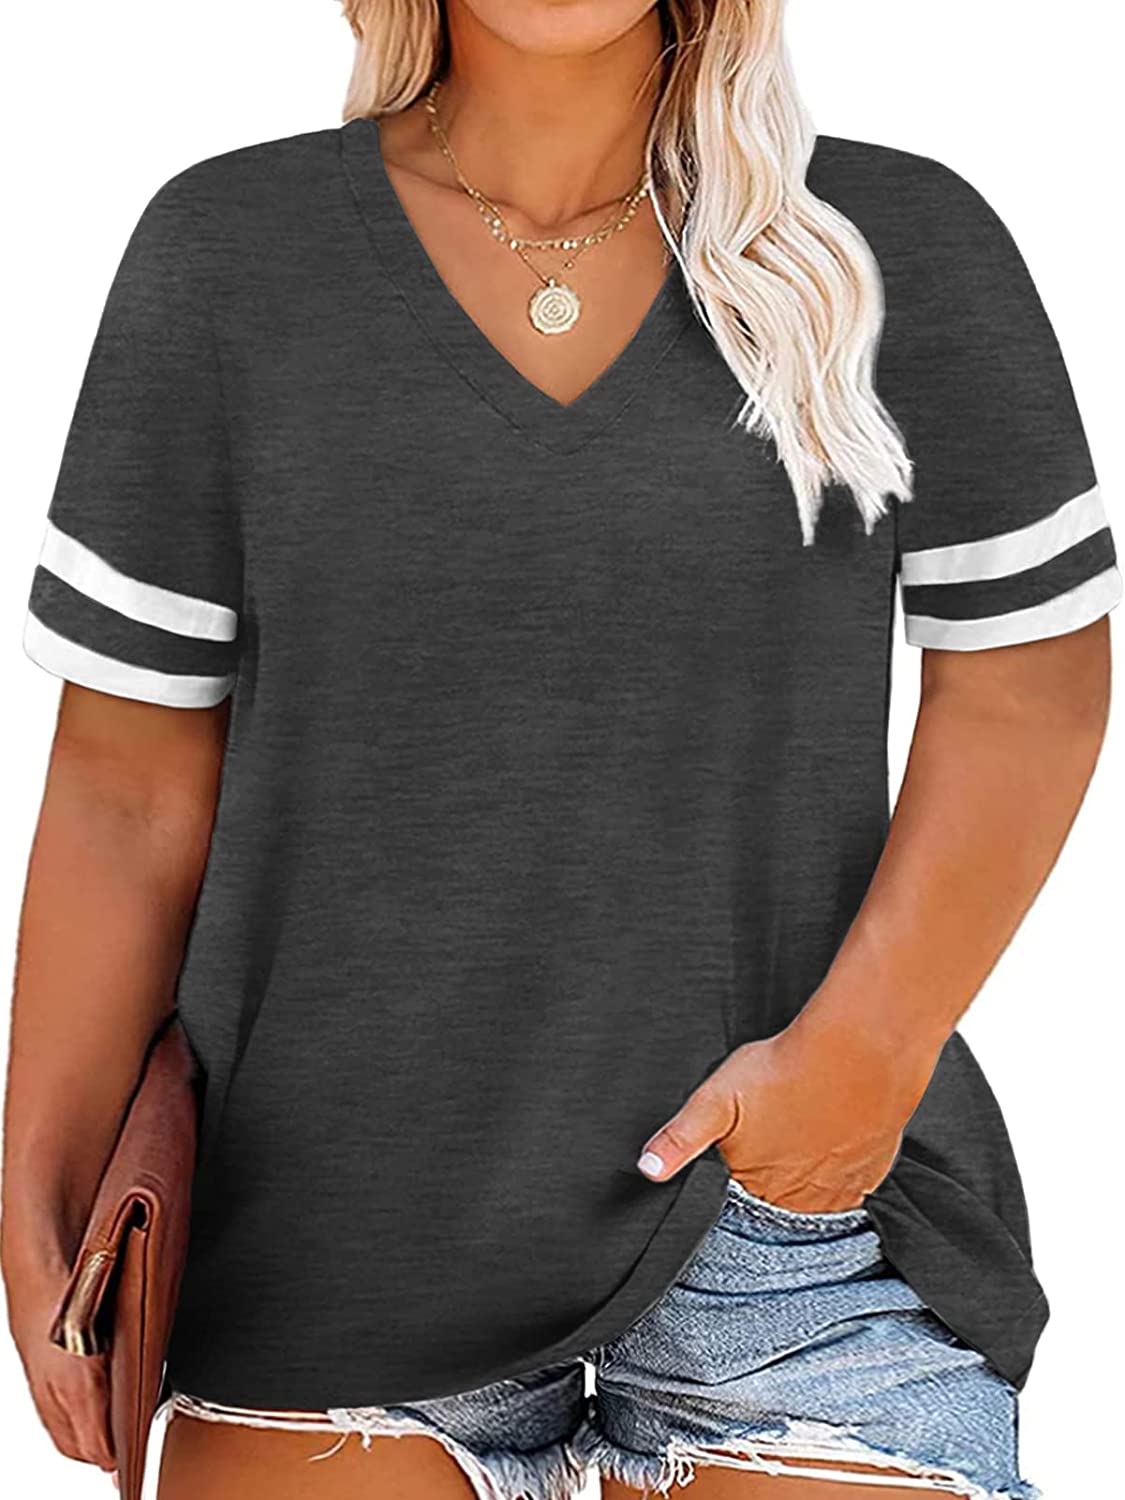 ROSRISS Plus-Size Tops for Women Summer Casual T Shirts Flowy Tunics Tee XL-4XL 